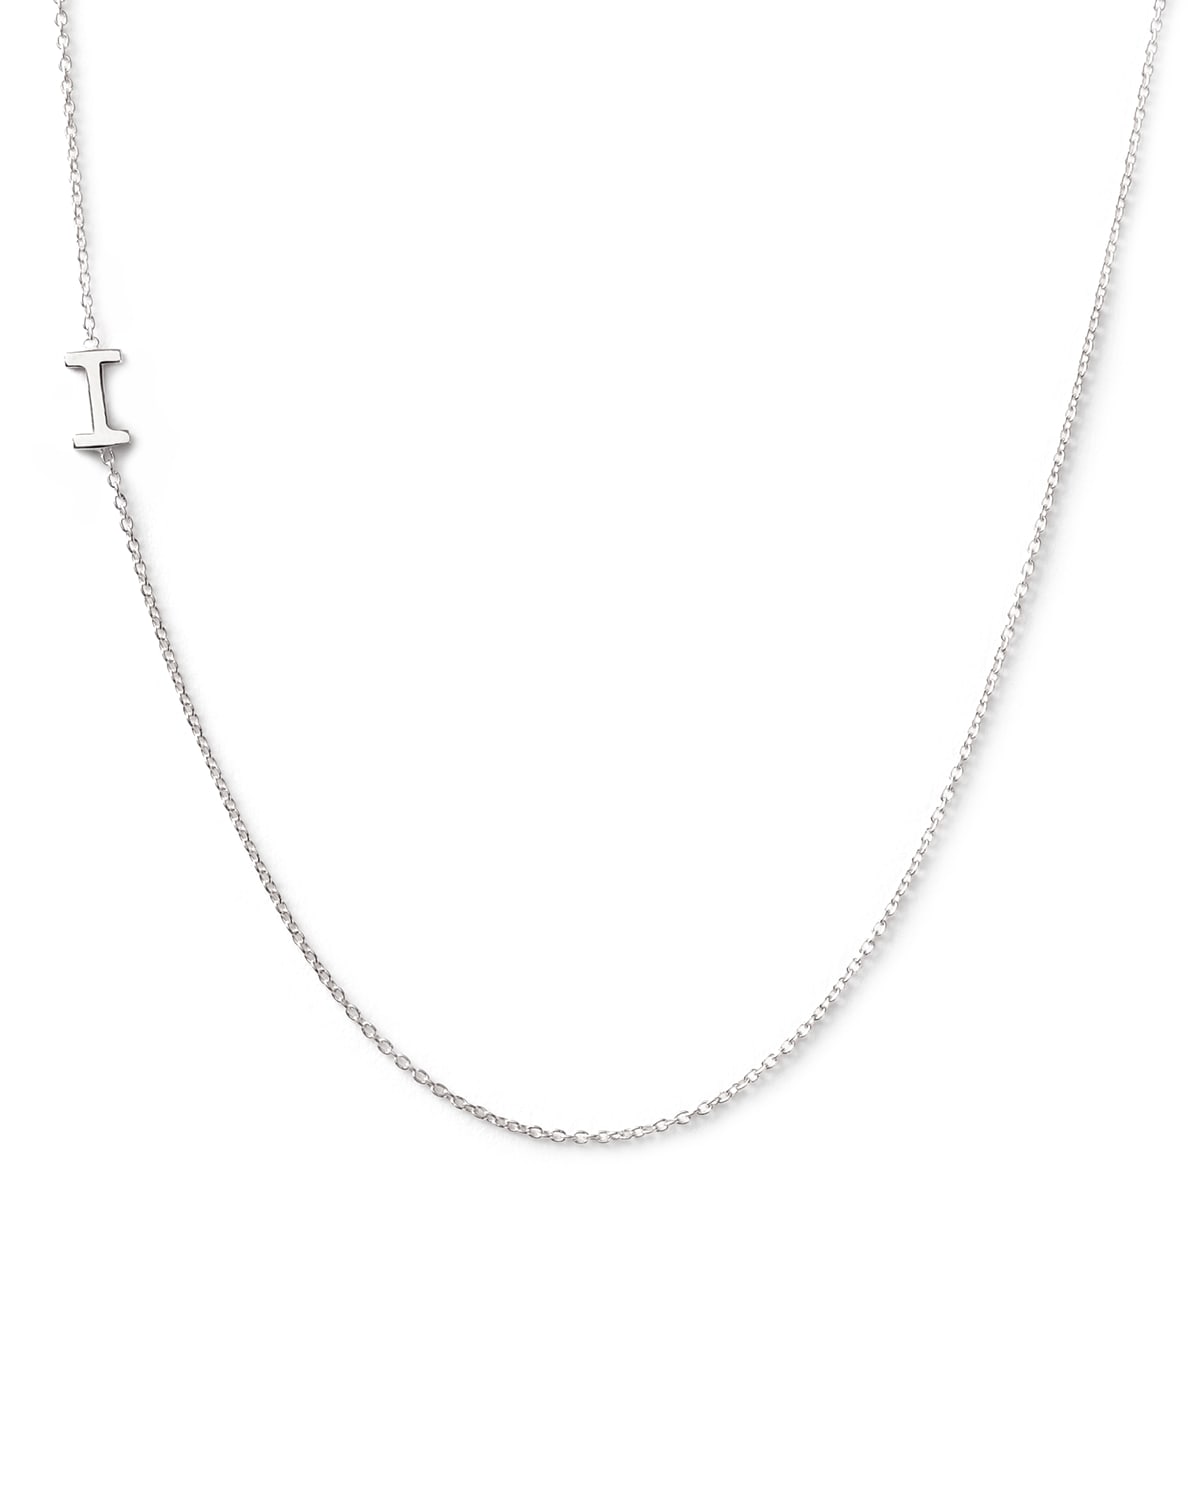 Maya Brenner Designs 14k White Gold Mini Letter Necklace